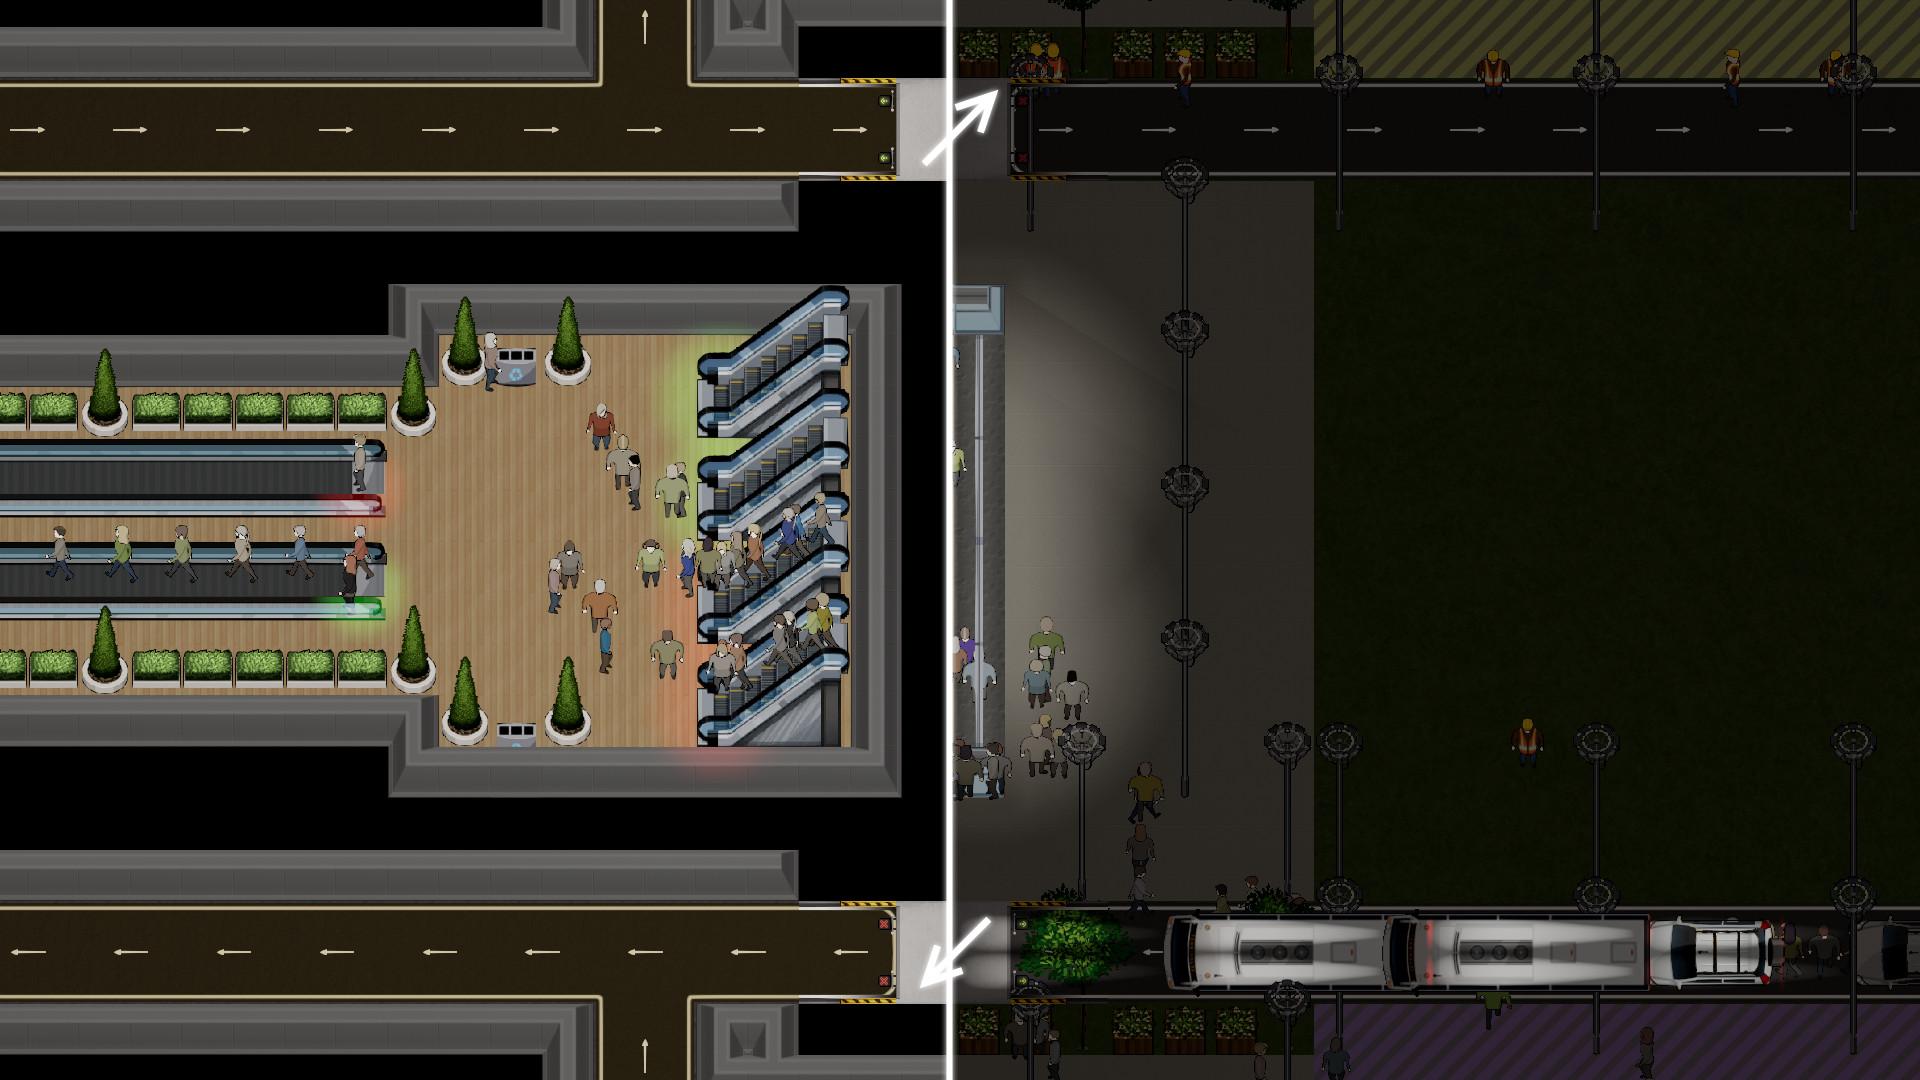 Screenshot №6 from game SimAirport